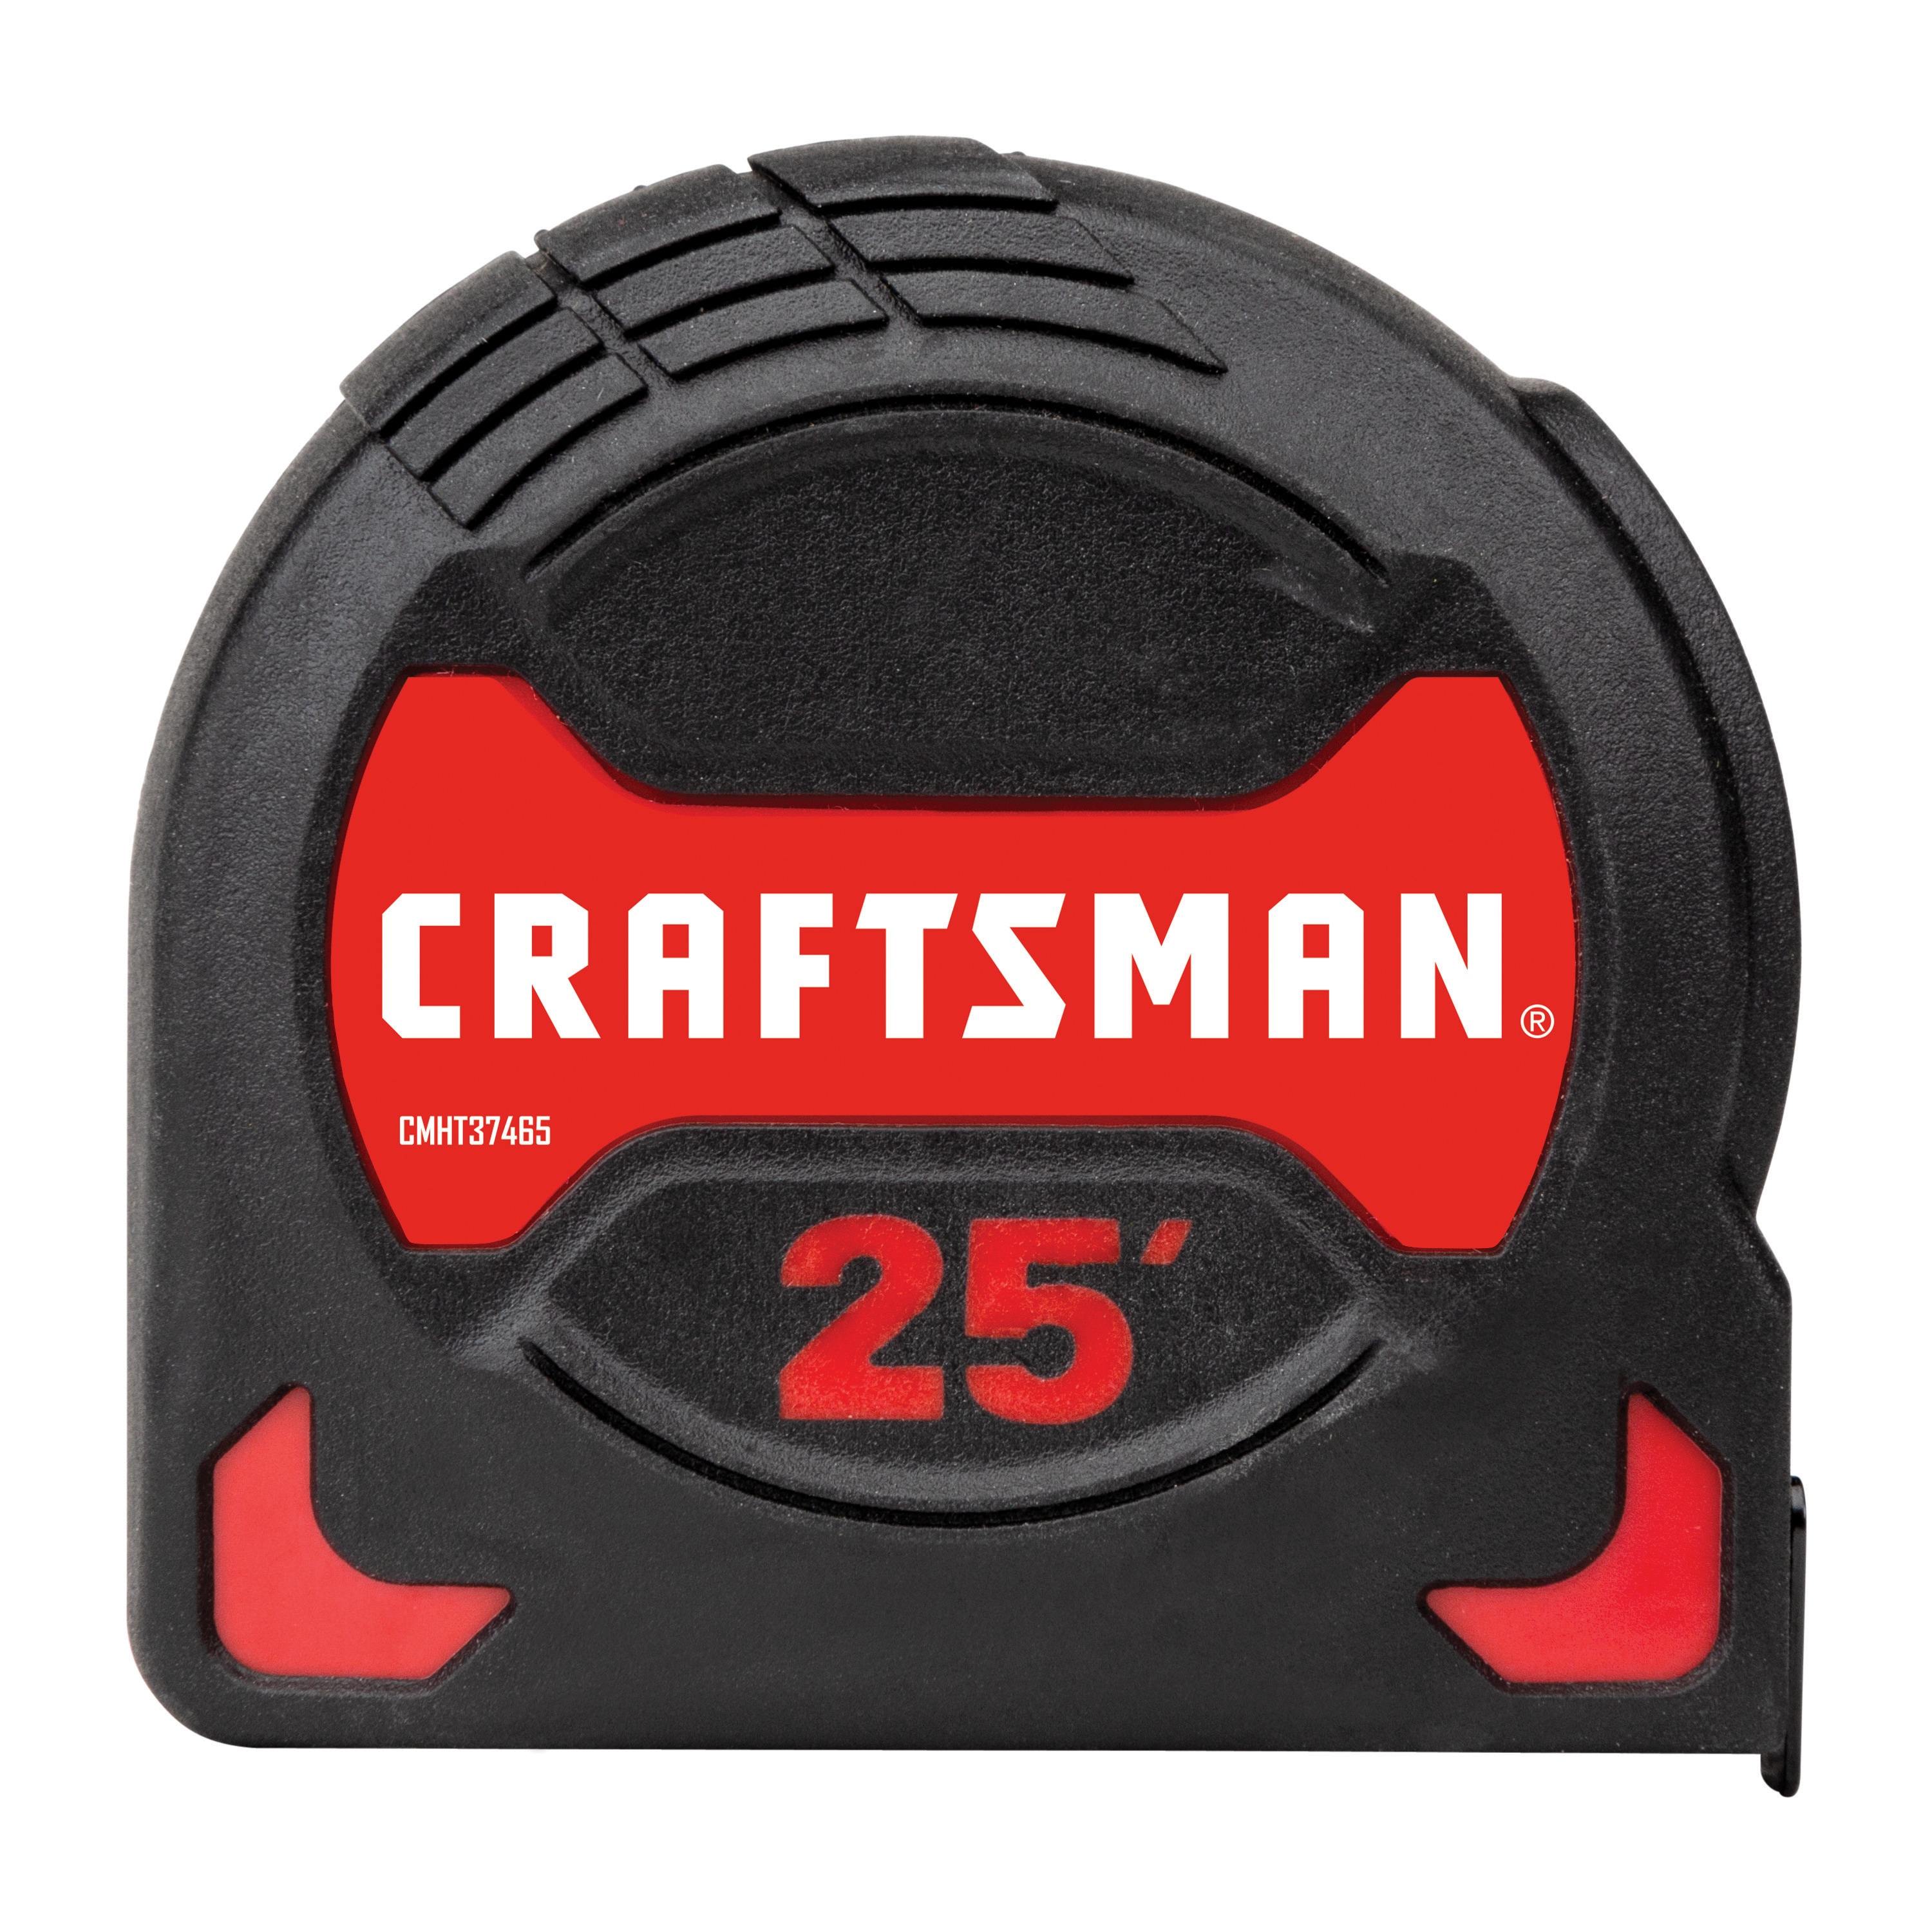 CRAFTSMAN 16-oz Smooth Face Steel Head Fiberglass Claw Hammer & HI-VIS  25-ft Tape Measure at Lowes.com